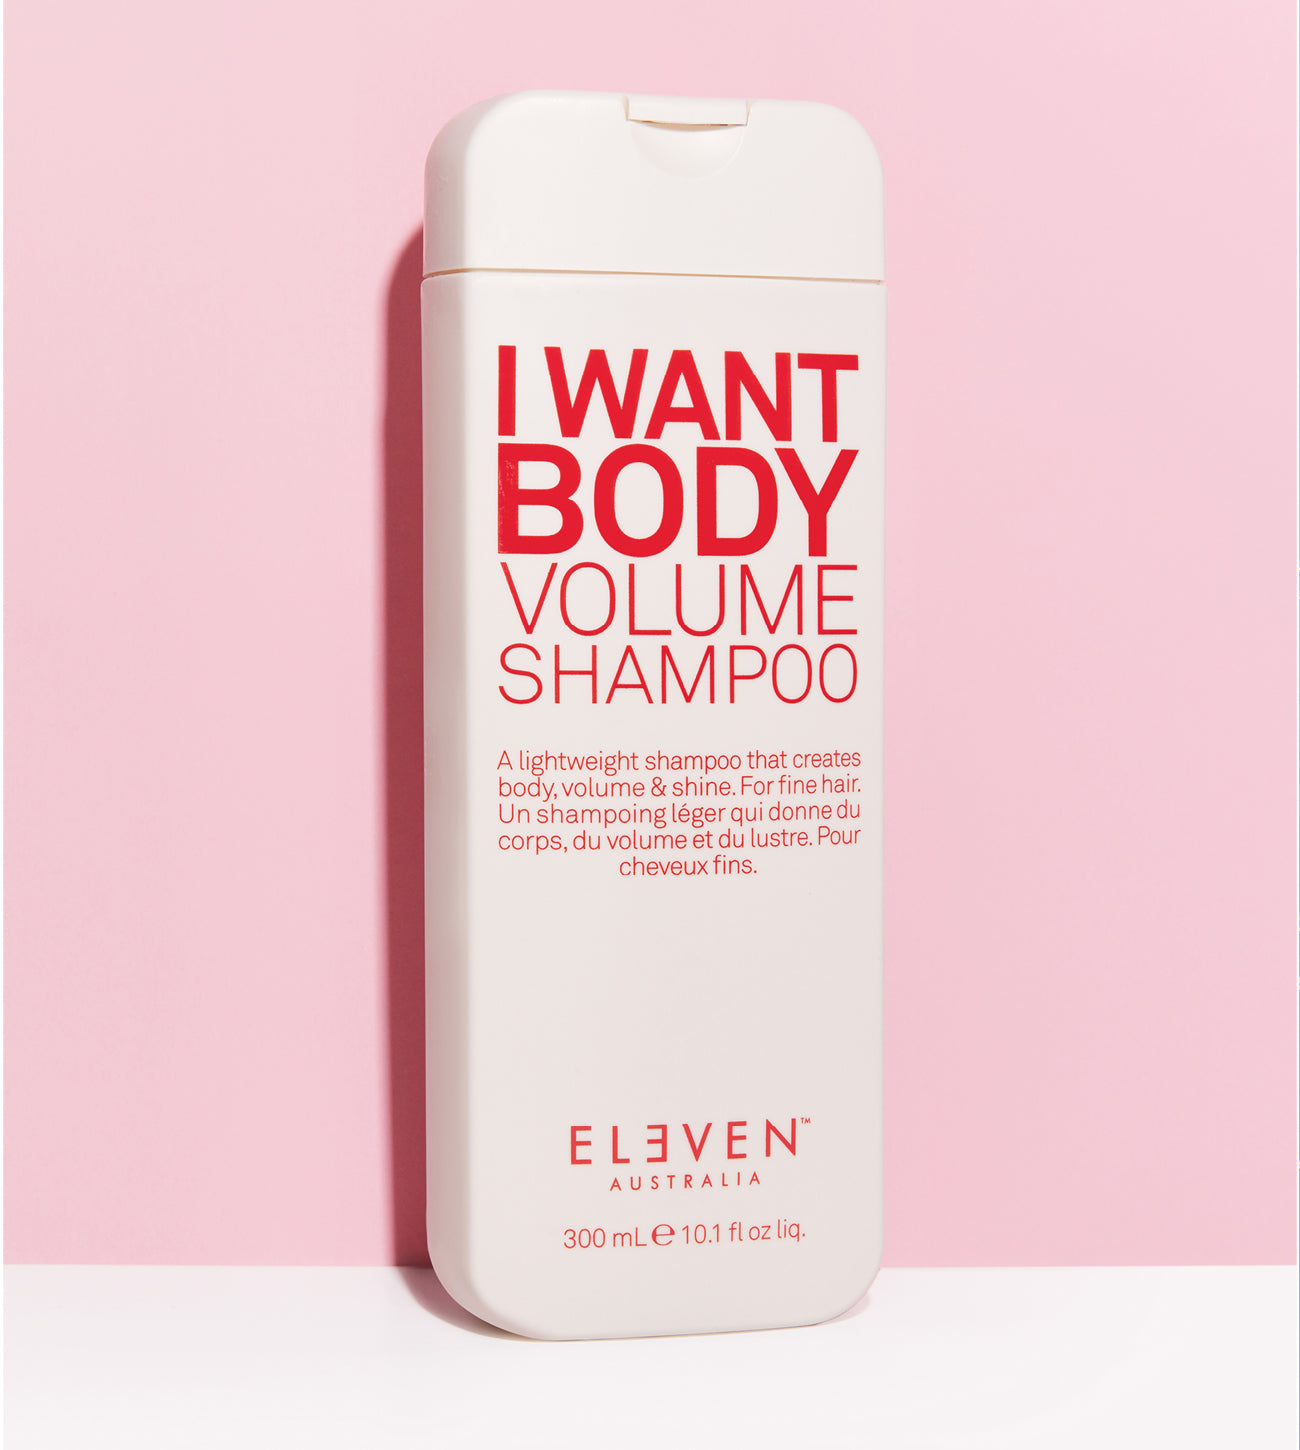 ELEVEN hair I WANT BODY VOLUME SHAMPOO lightweight creates body volume and shine for fine hair ELEVEN Shampoo